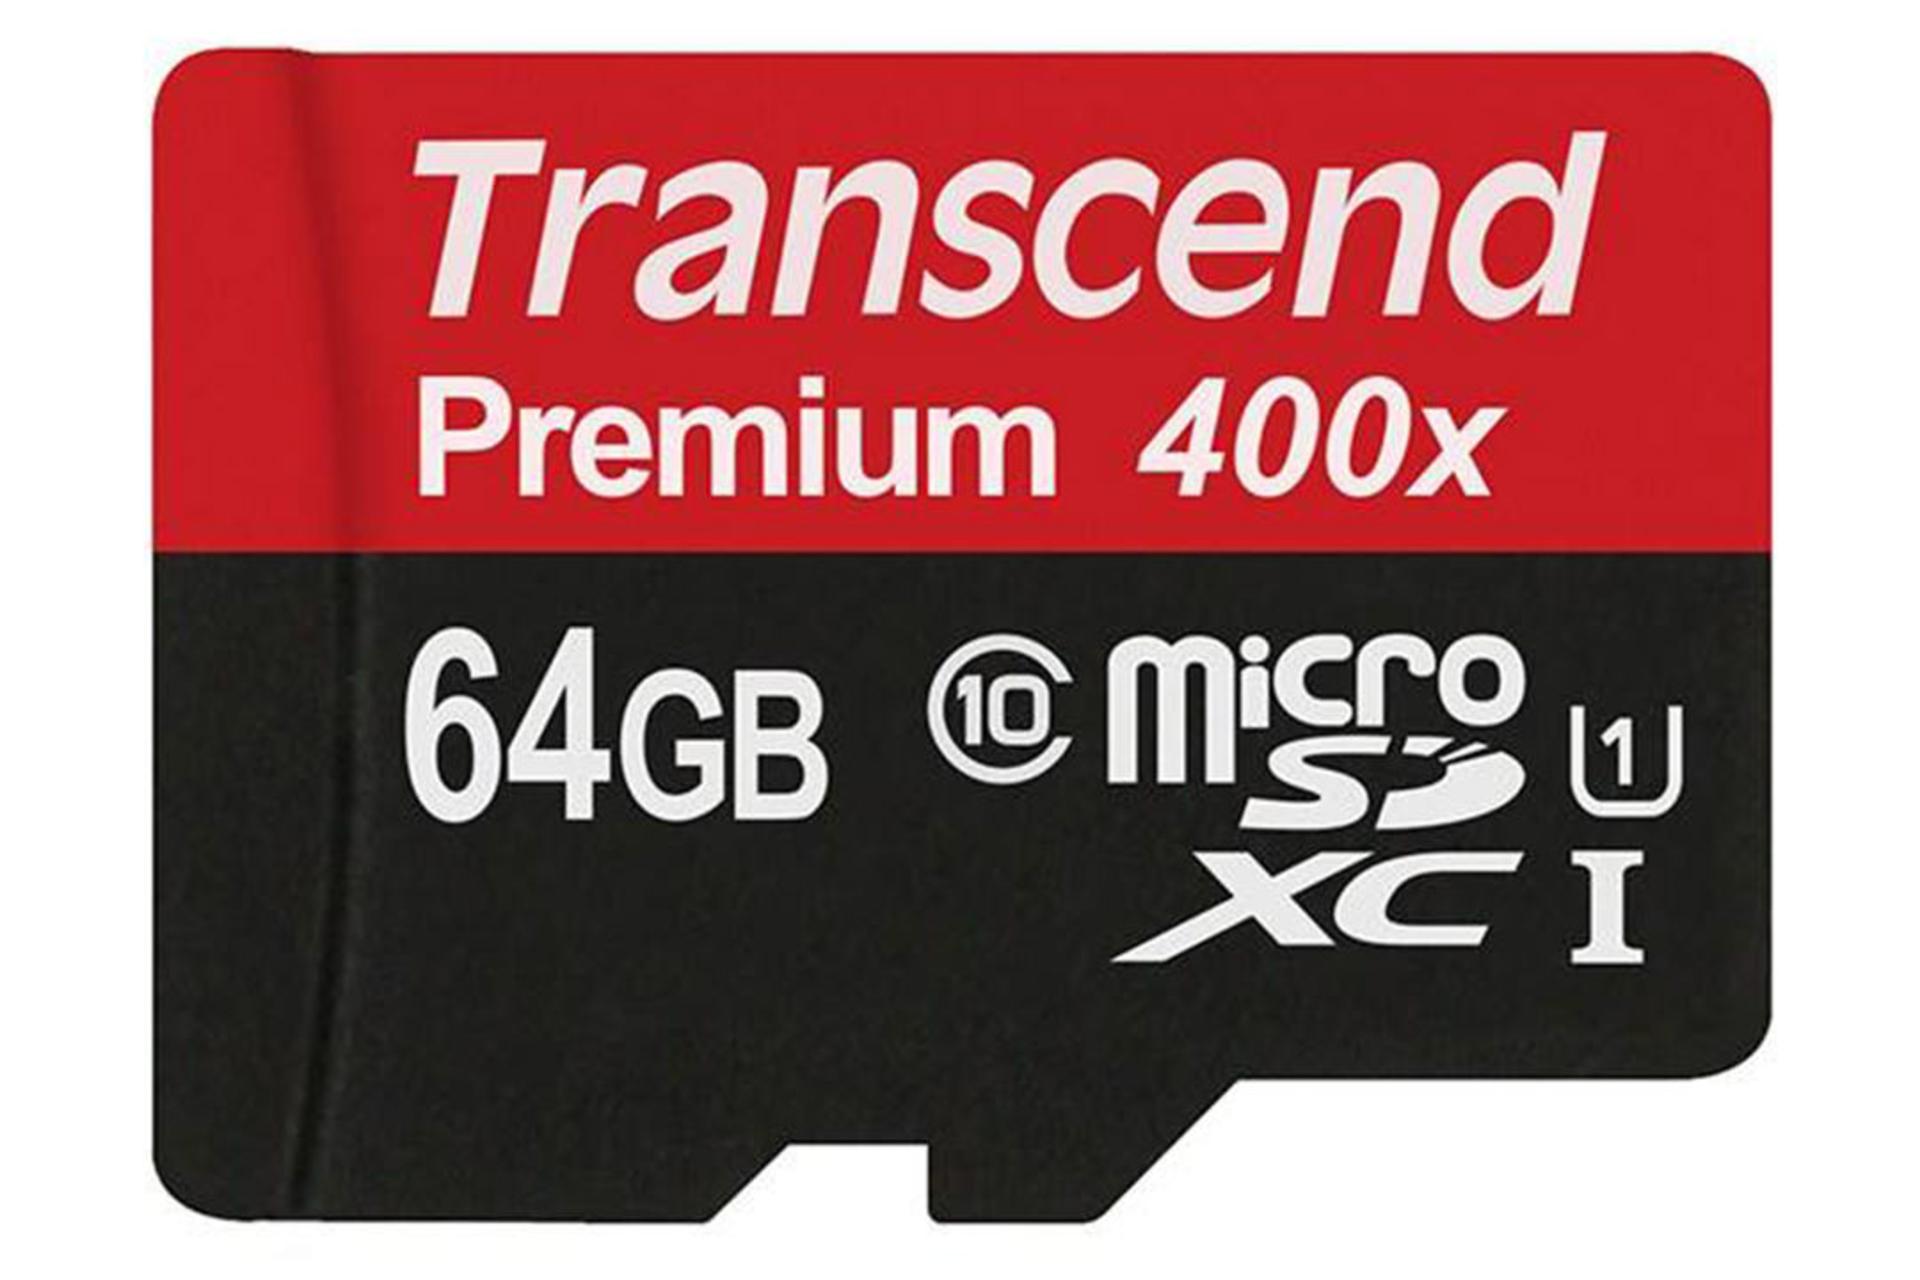 Transcend Premium microSDXC Class 10 UHS-I U1 64GB